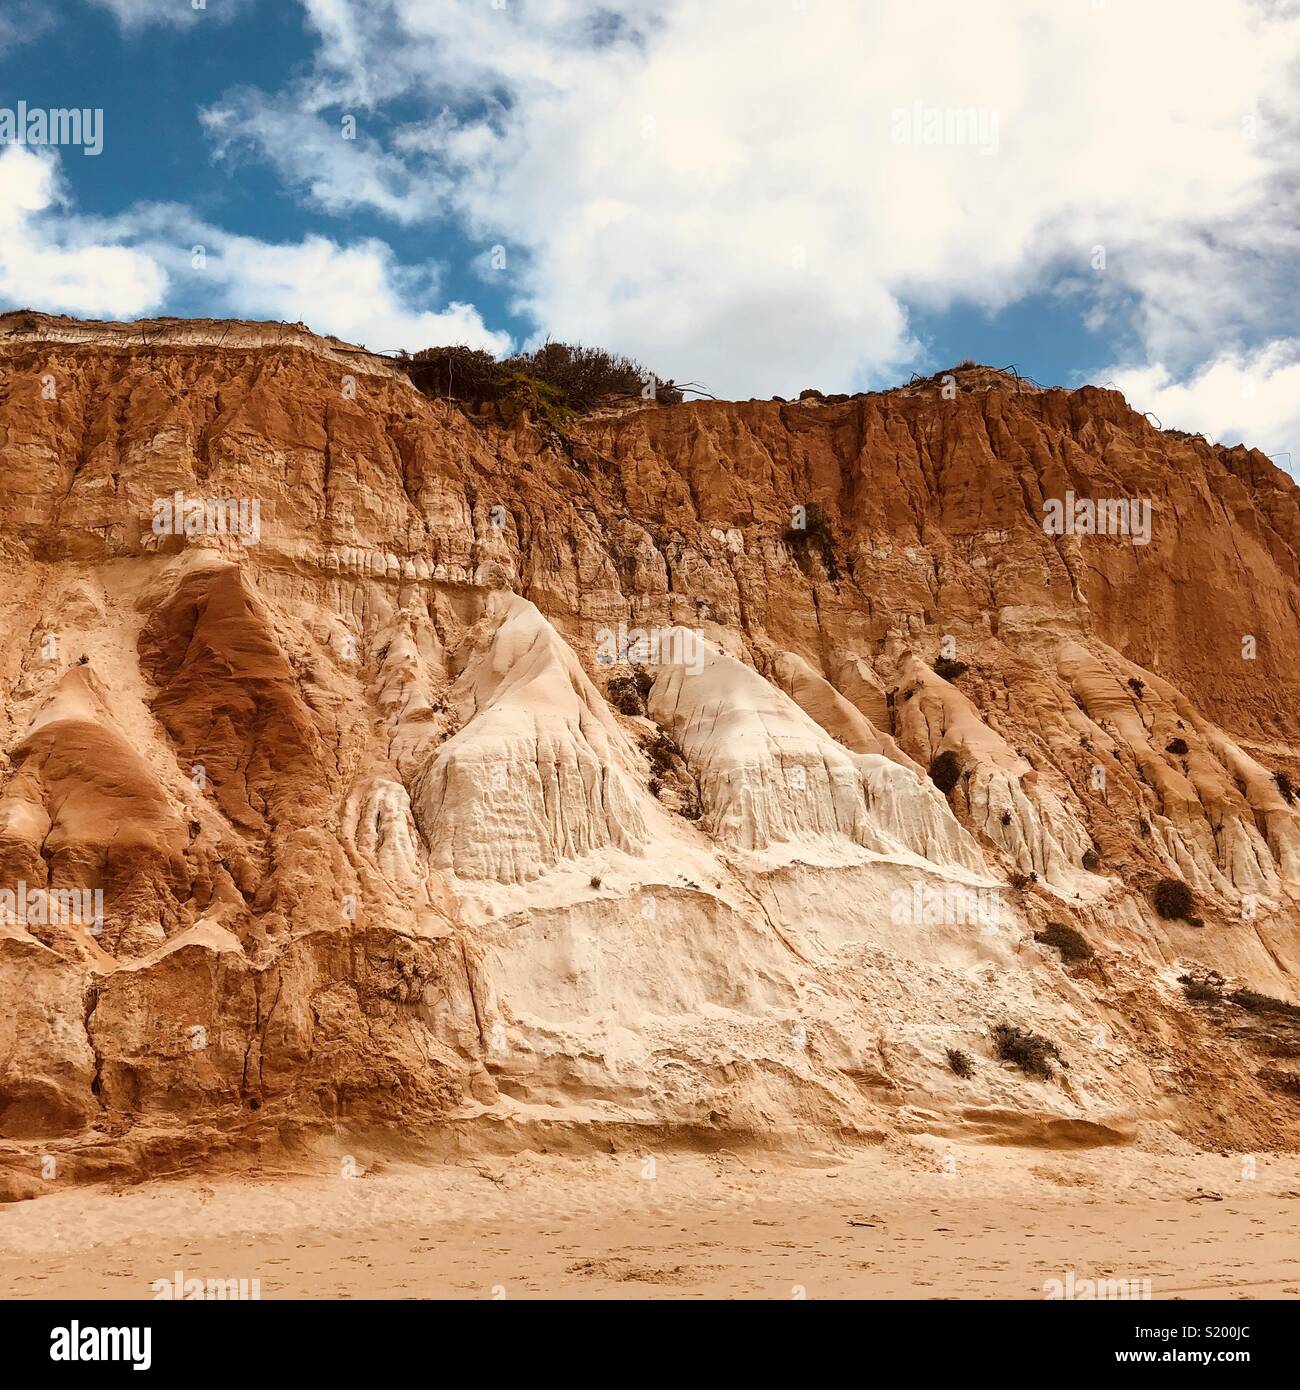 Cliff formation in Algarve, Portugal. Stock Photo